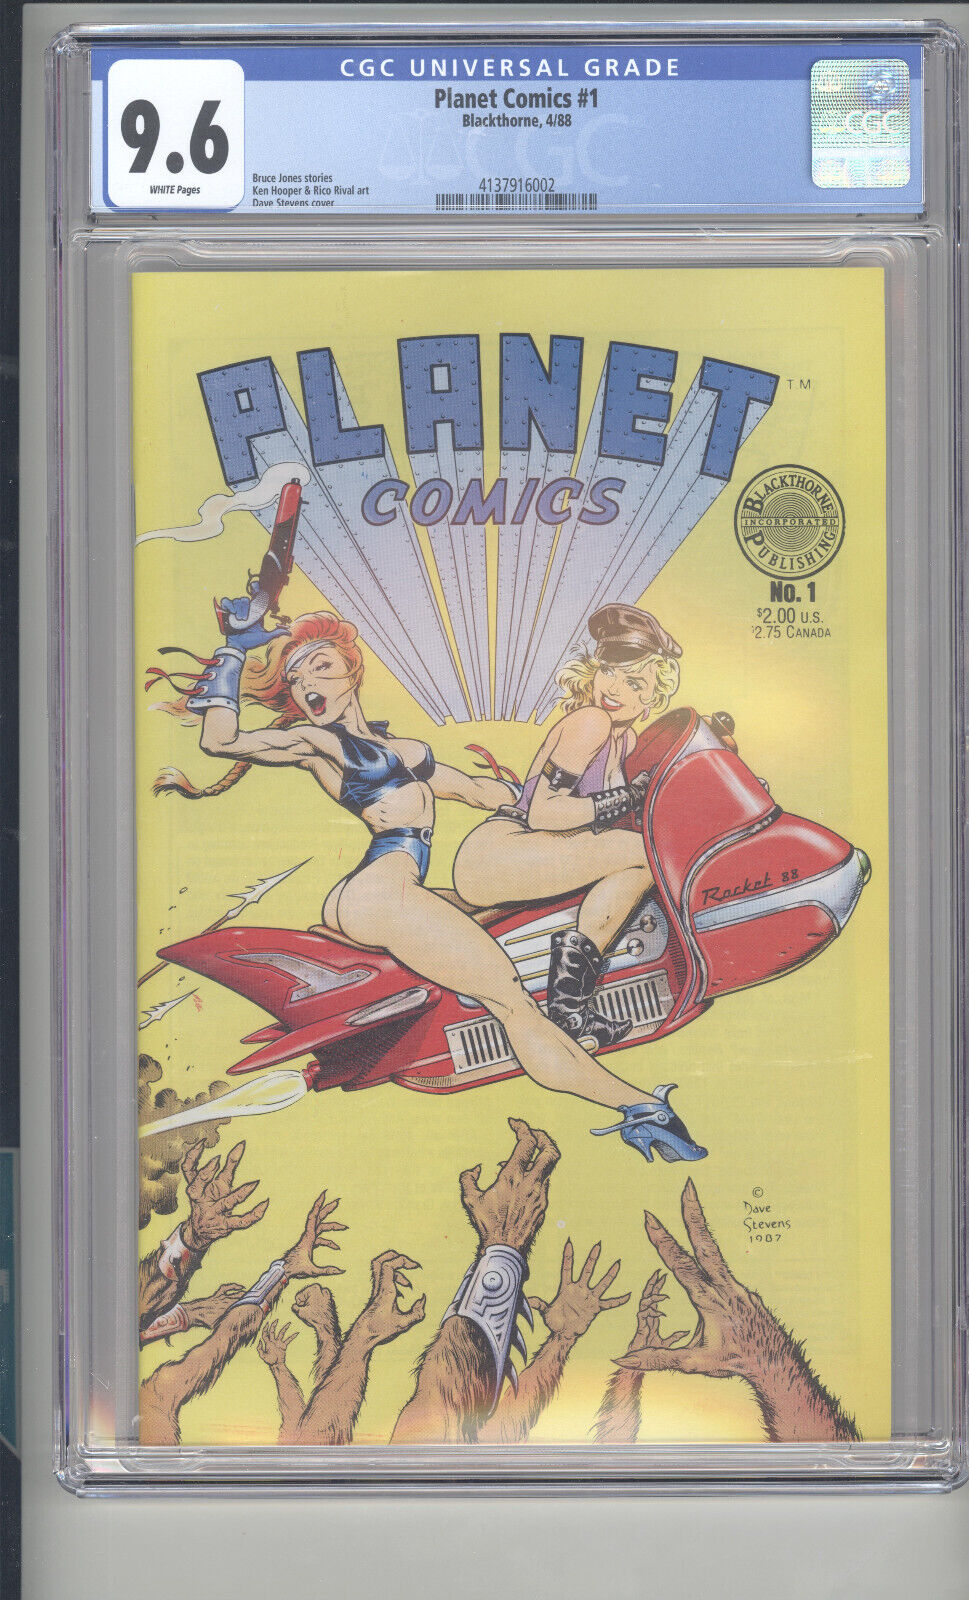 Planet Comics #1 CGC 9.6 - Dave Stevens Classic Cover